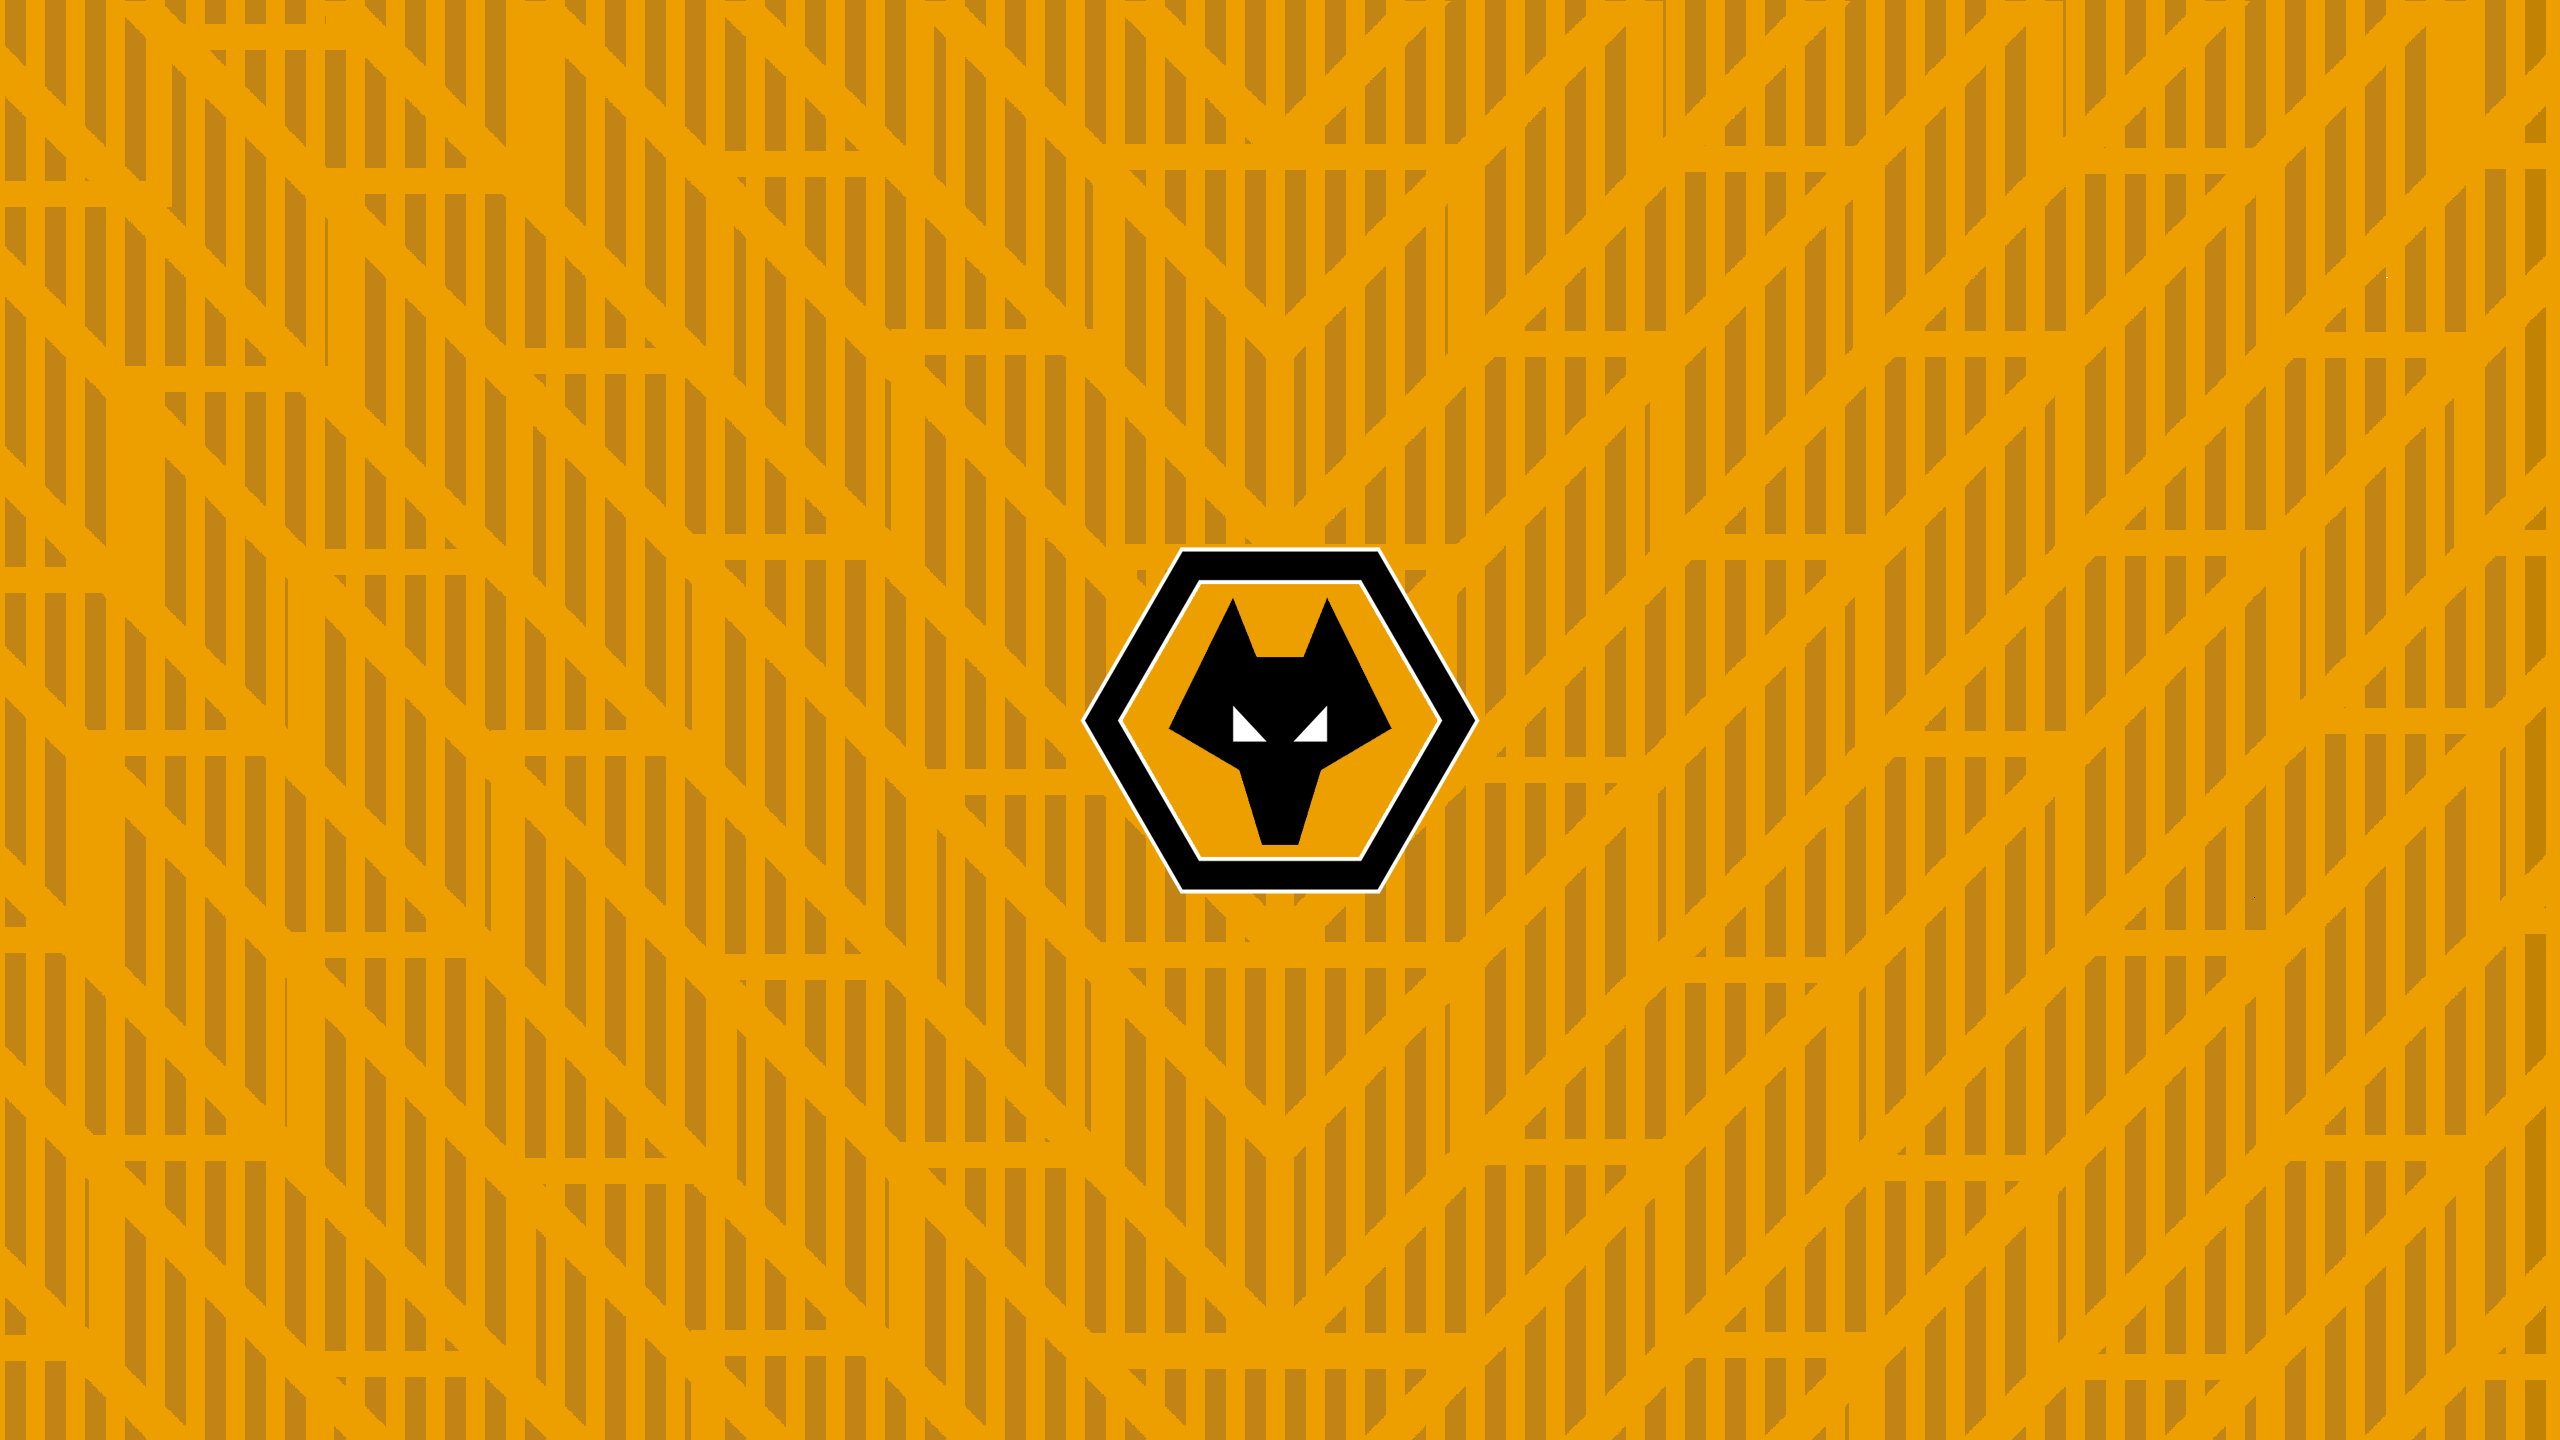 Wolverhampton Wanderers Wallpapers